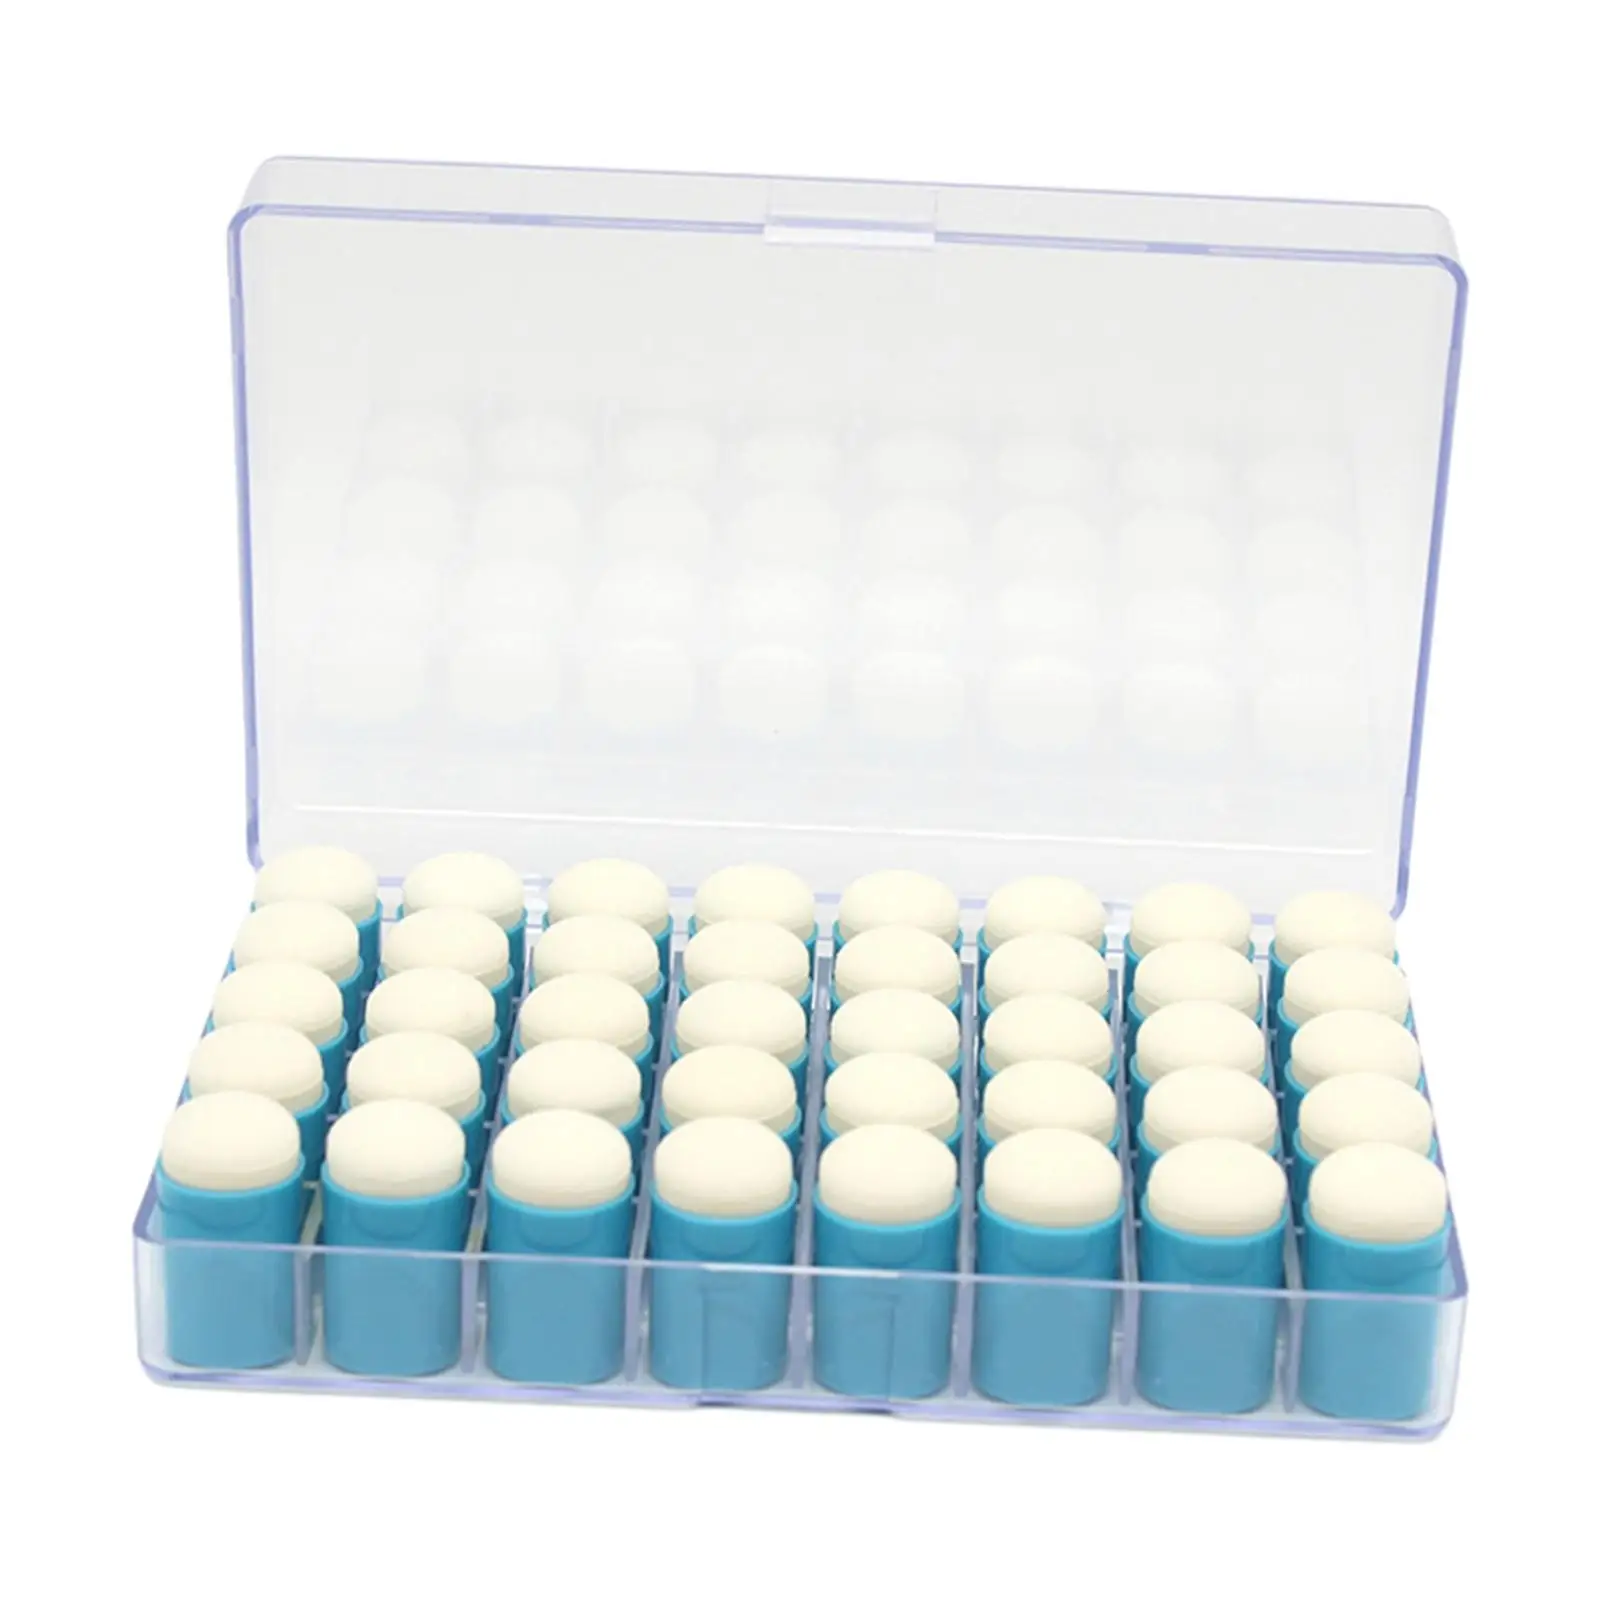 40pcs Finger Sponge Dauber Set Ink Pad Stamping Brushes with Storage Box for